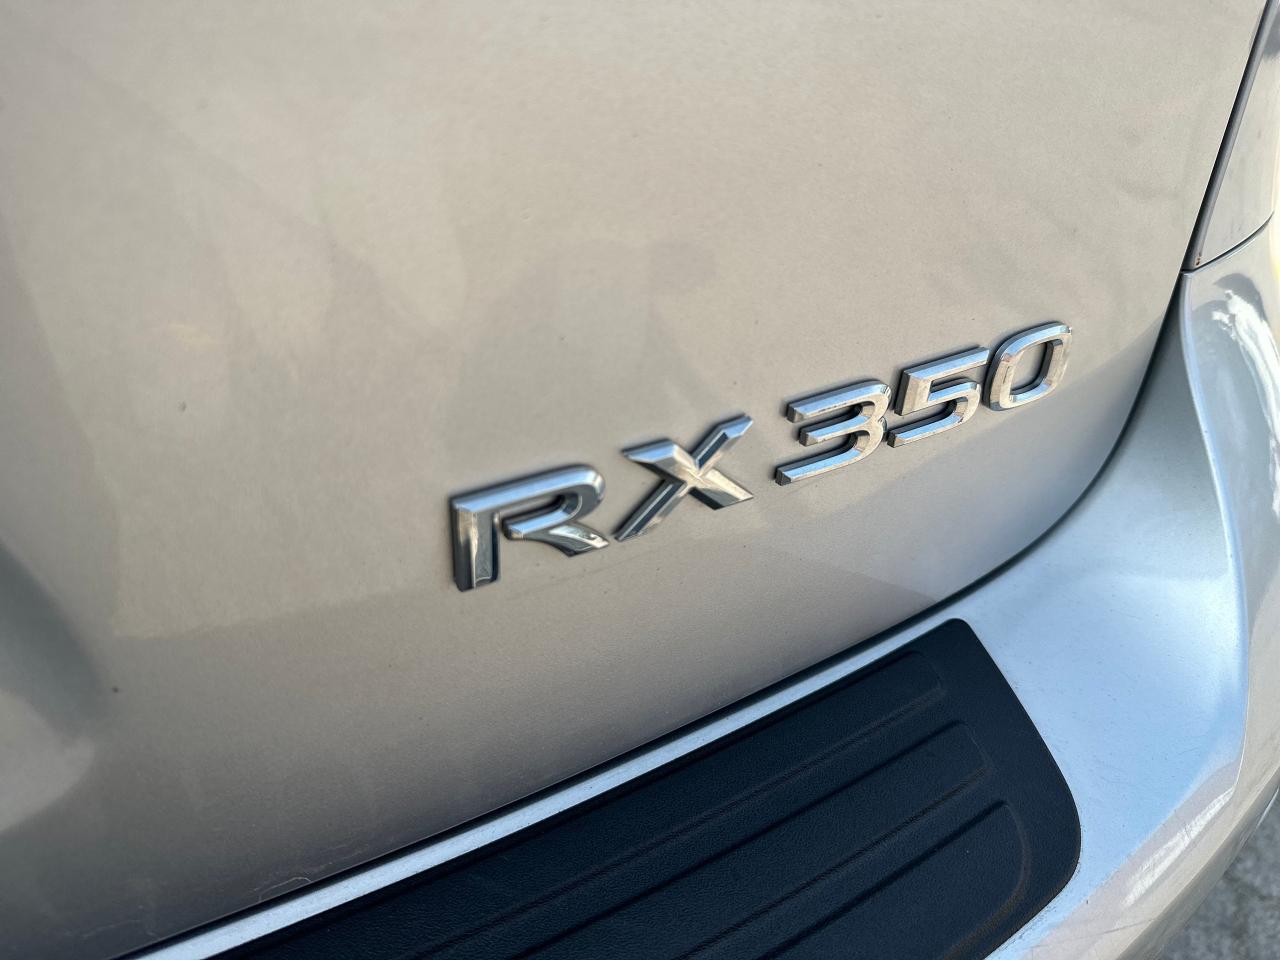 2011 Lexus RX 350 Navigation, Leather, Sunroof - Photo #34